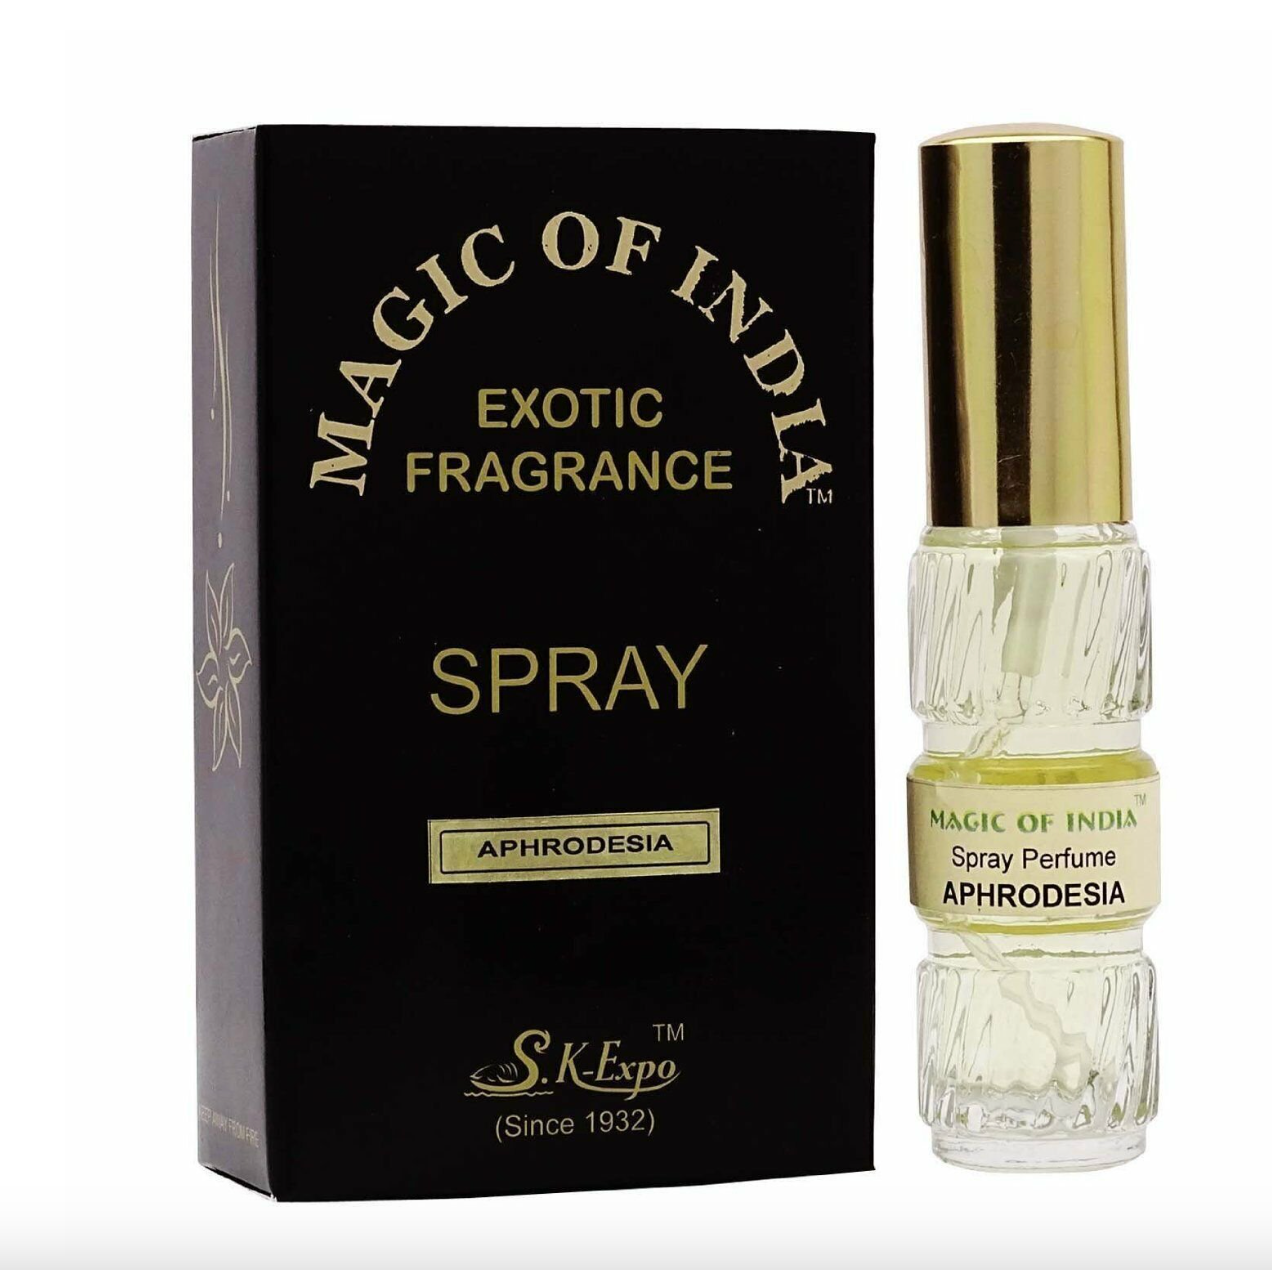 Magic of India Perfume Sprays